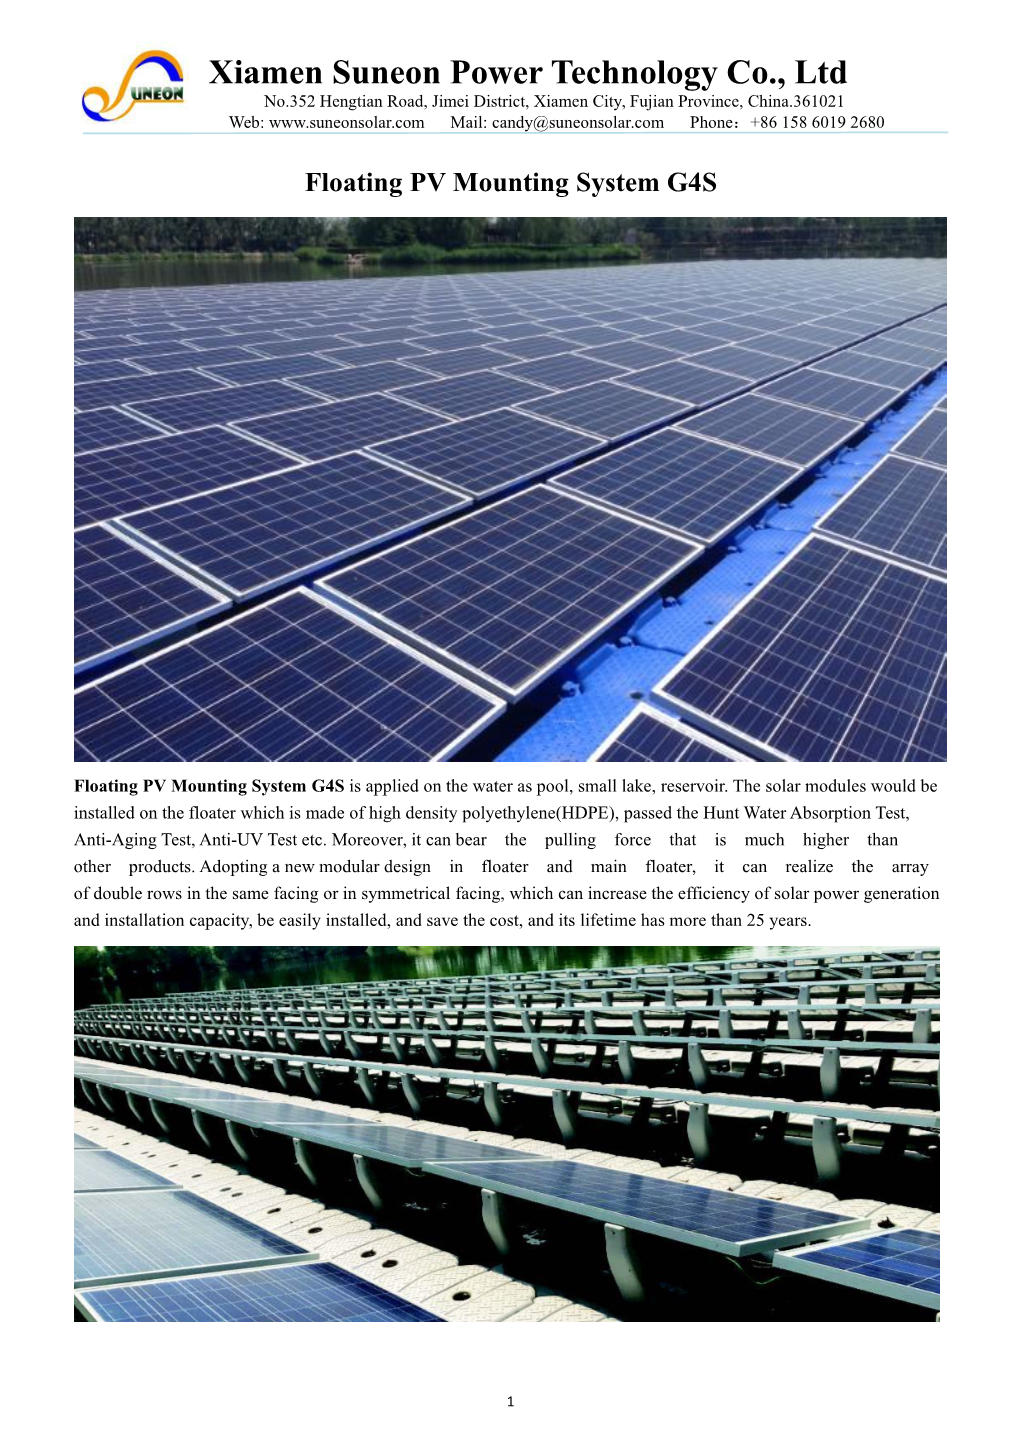 Xiamen Suneon Power Technology Co